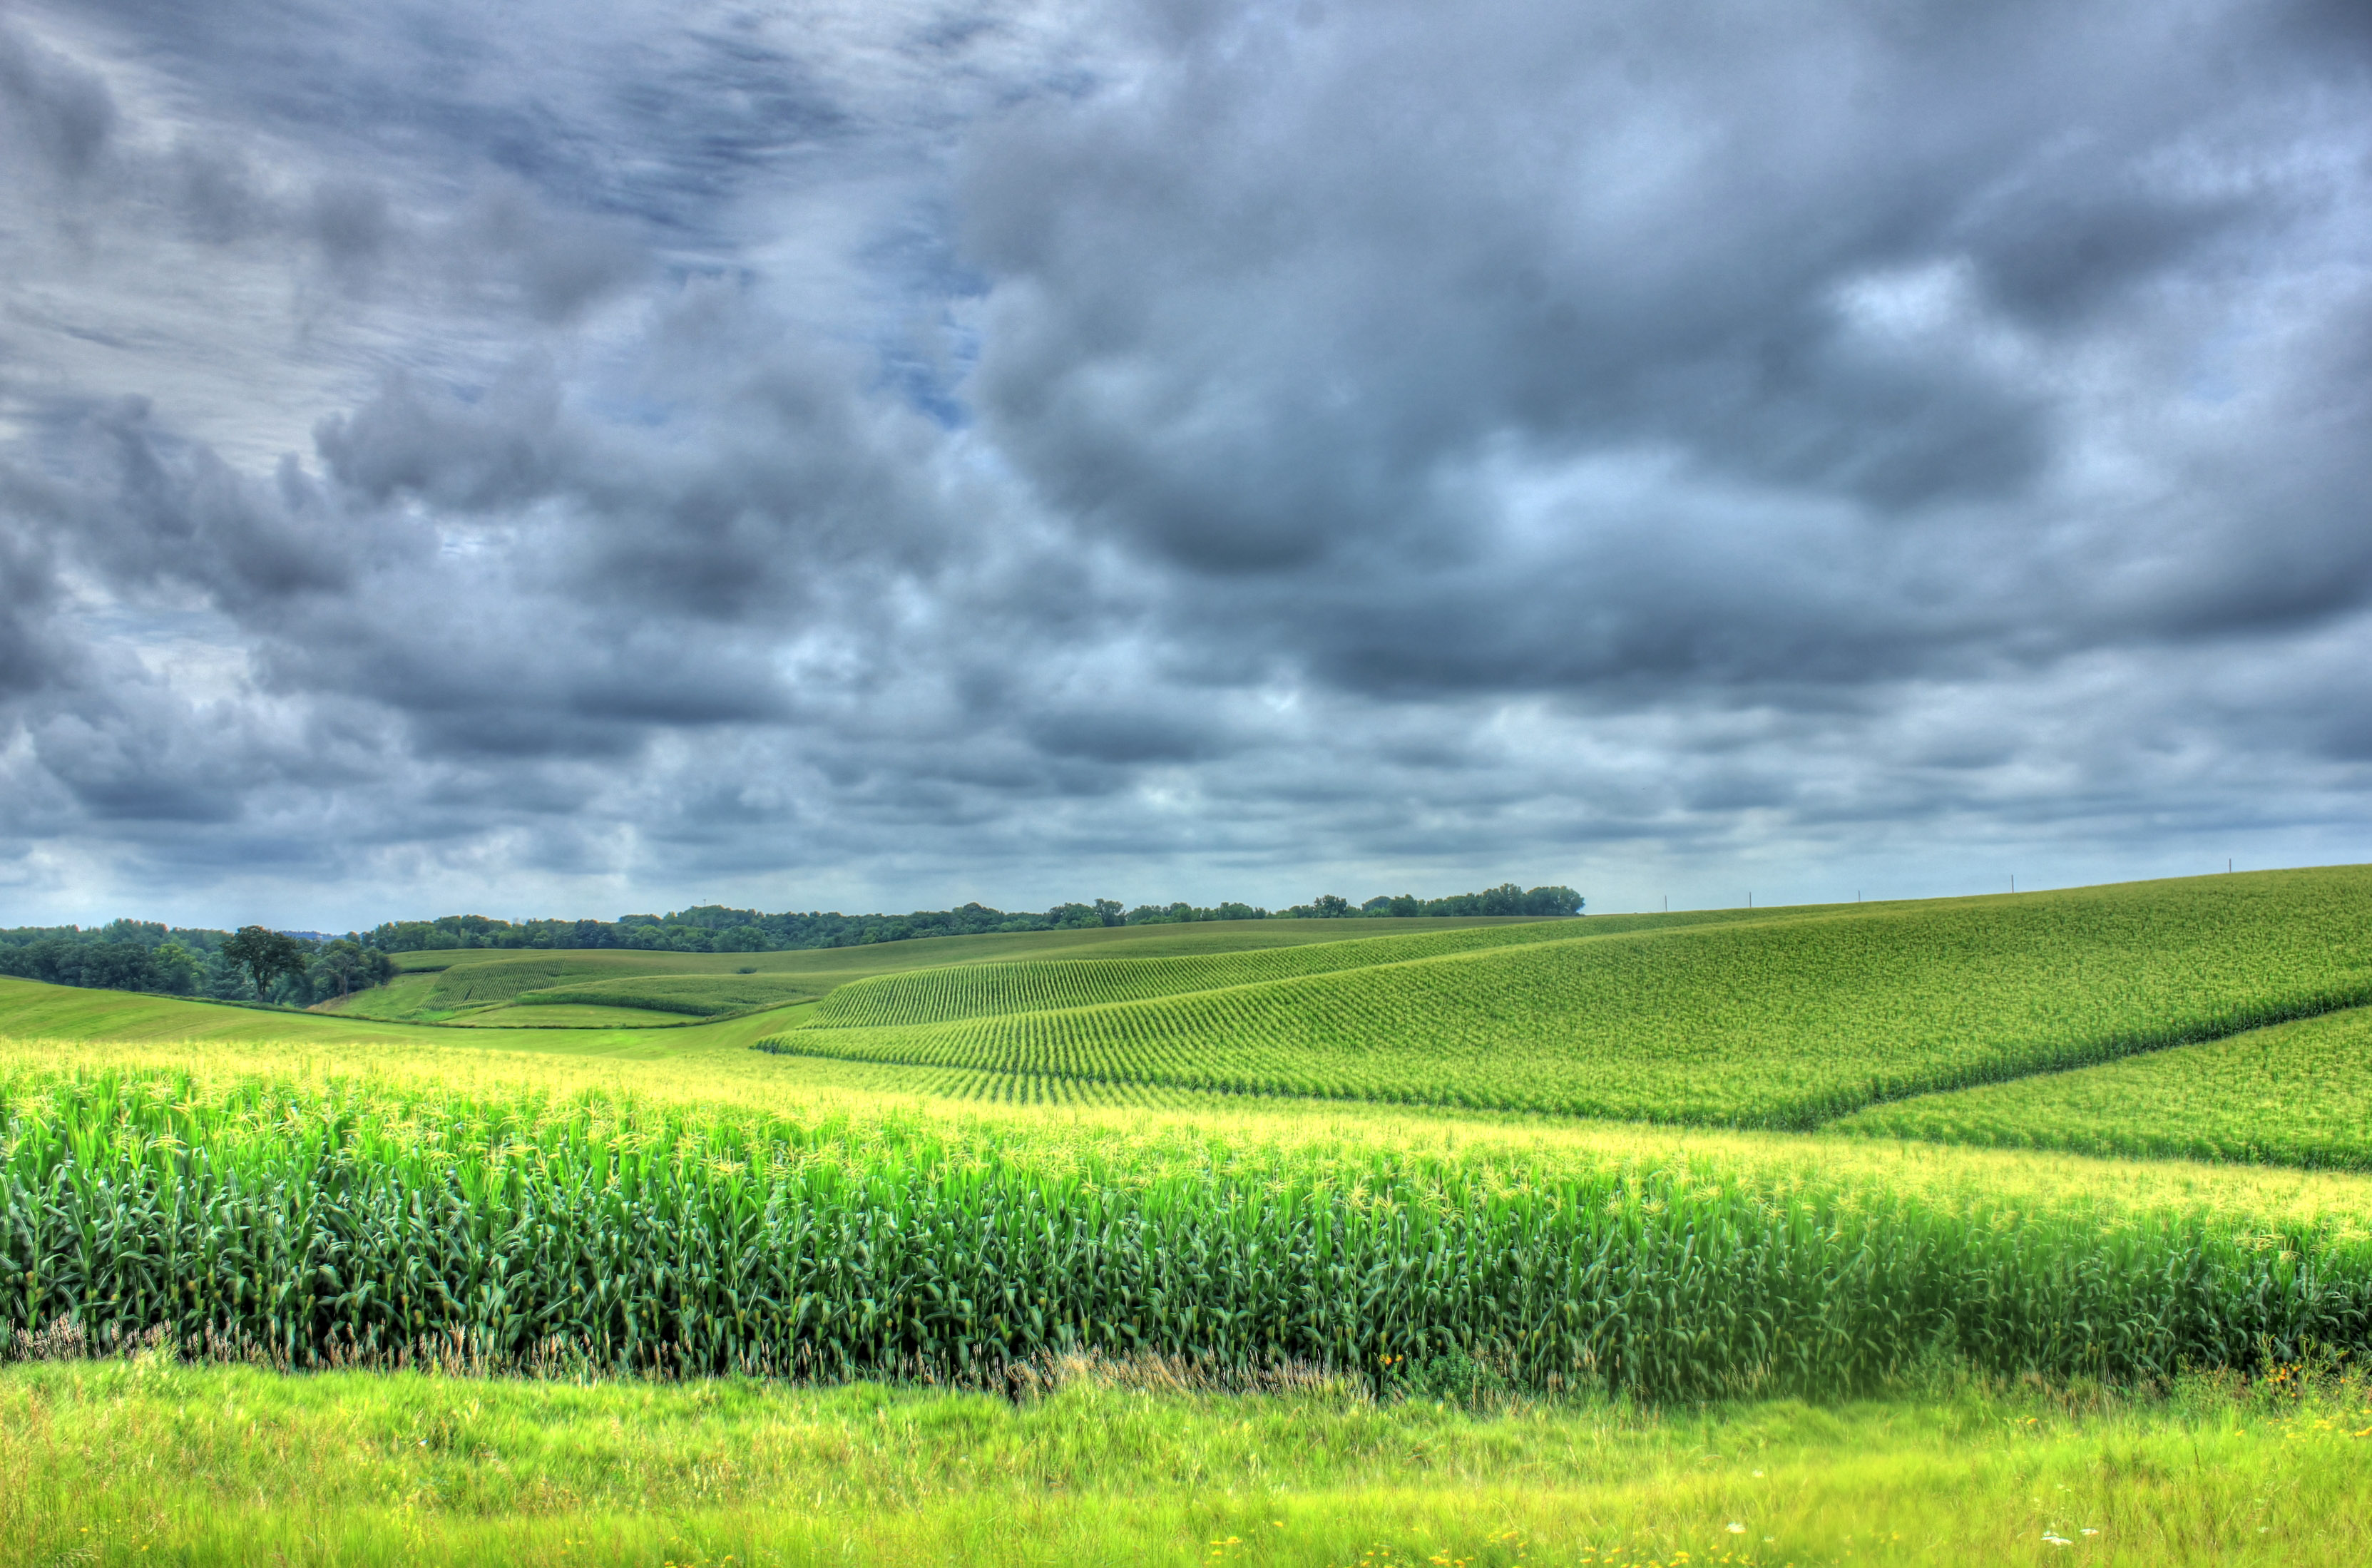 Landscape of Cornfields in Minnesota image - Free stock photo ...